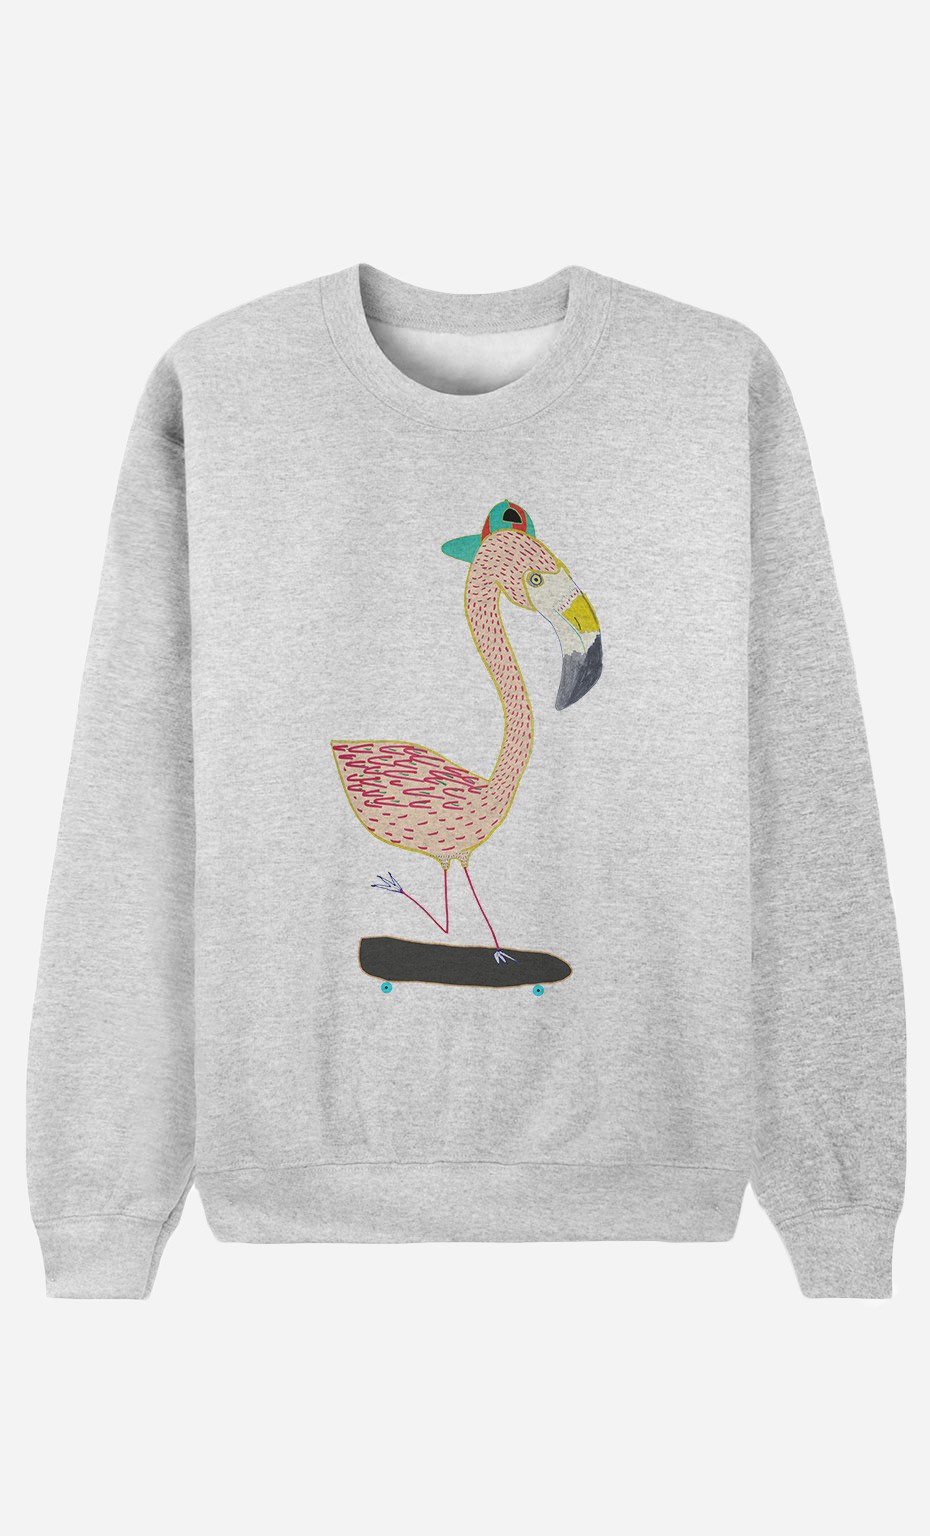 Sweatshirt Flamingo Skater